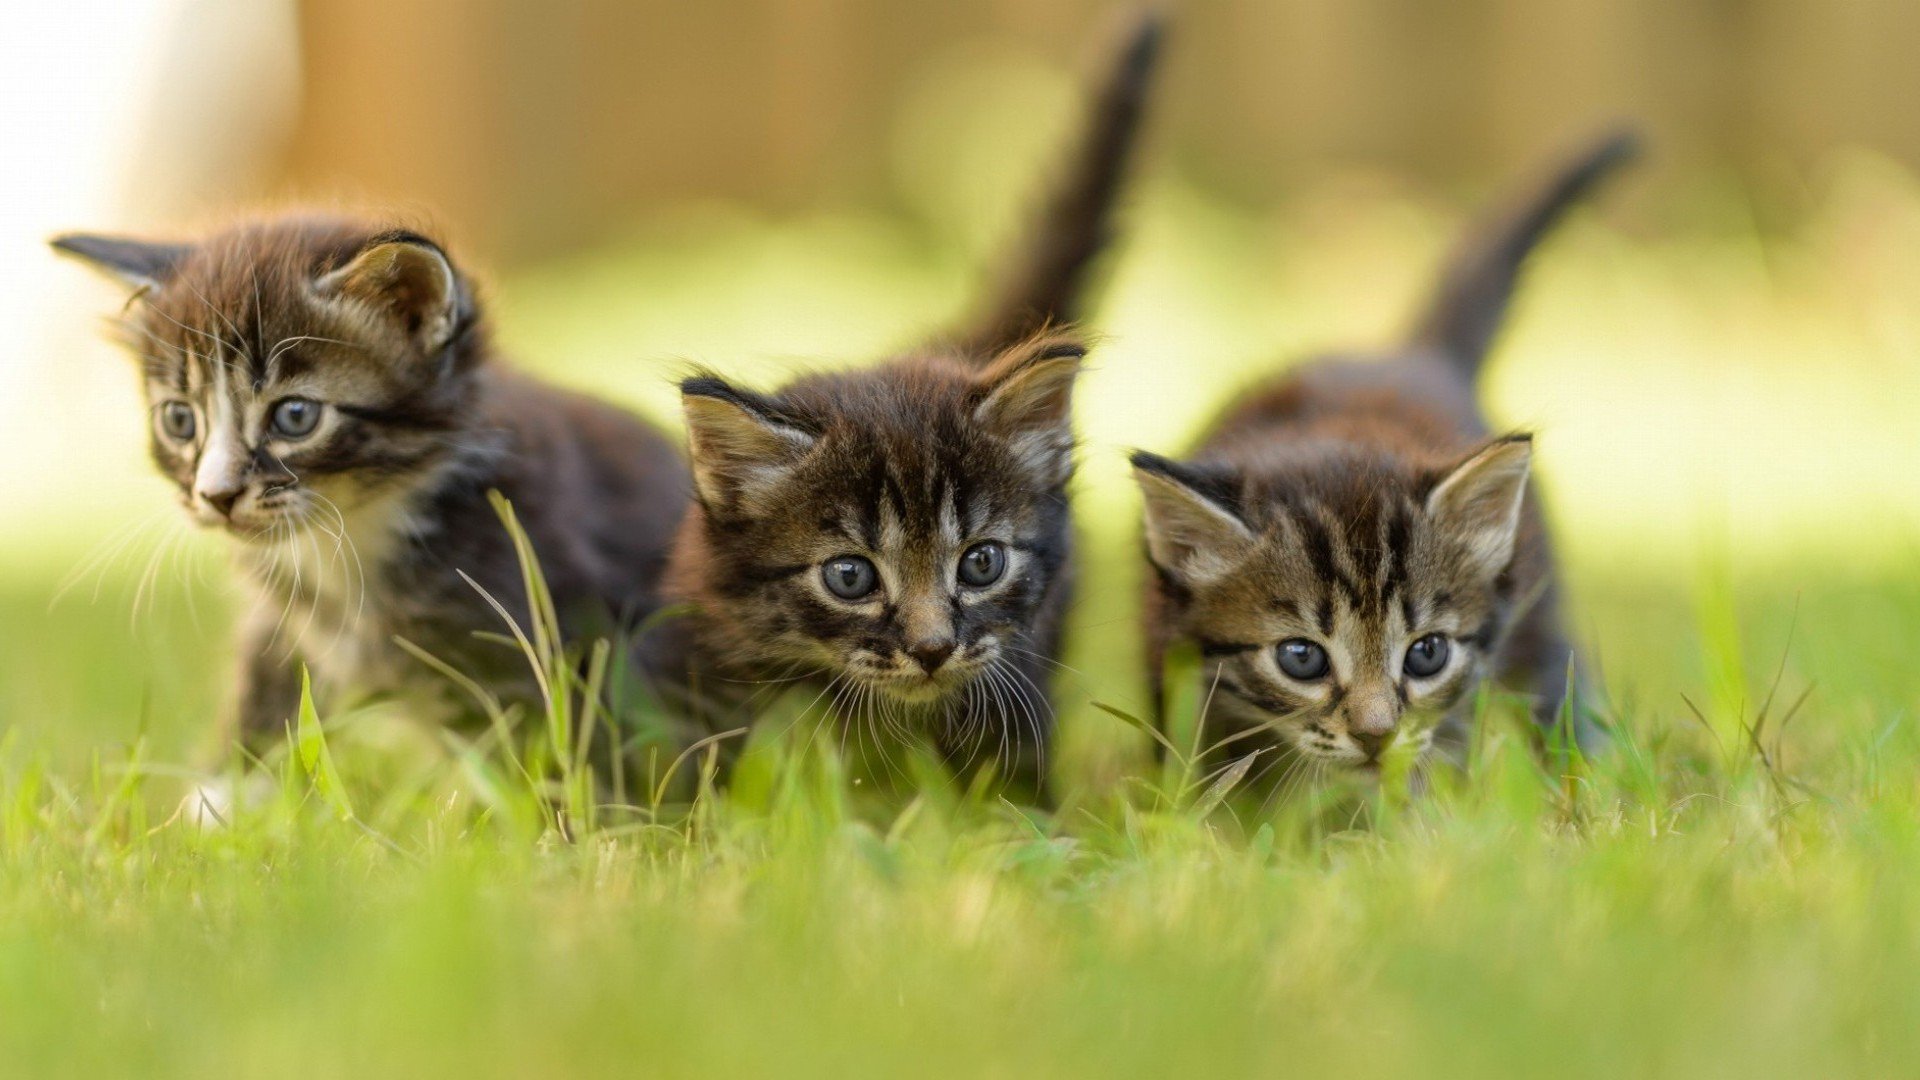 kittens-kitten-cat-cats-baby-cute-s-wallpapers-hd-desktop-and